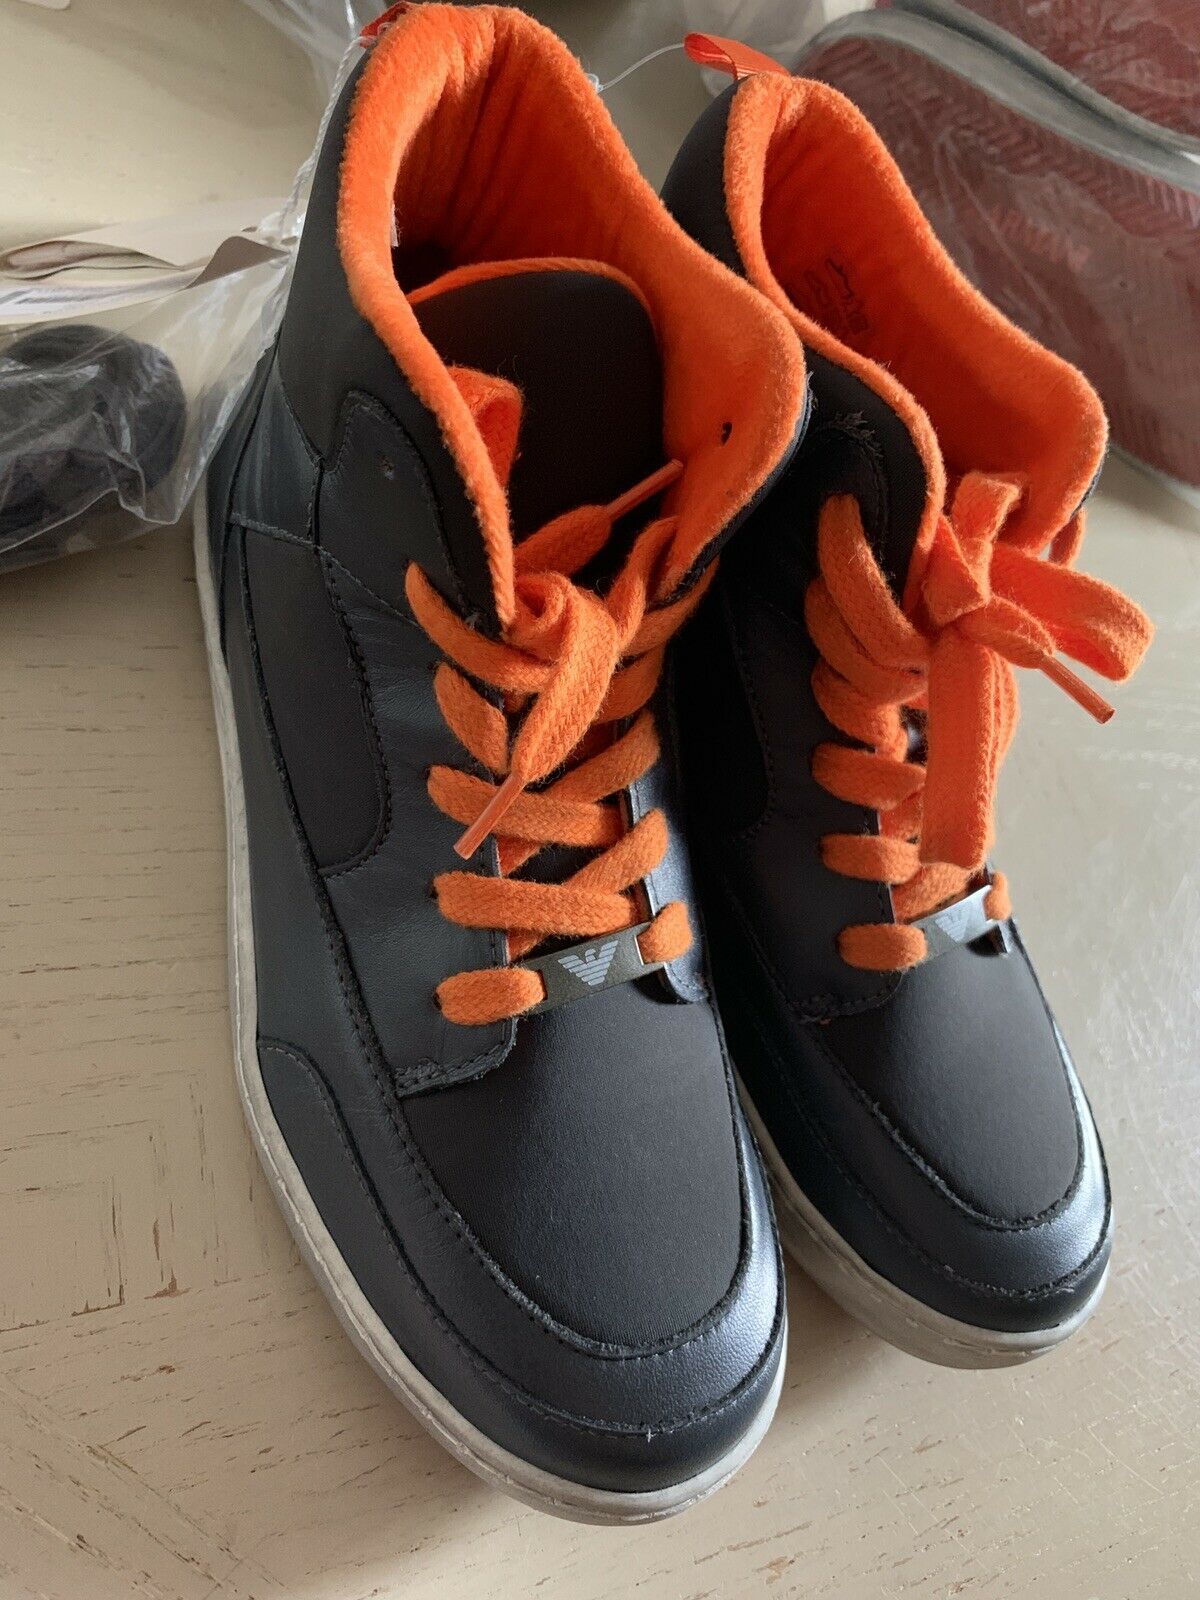 New Armani Junior Boys Leather/Nylon Sneakers Shoes Gray 5.5 US ( 38 Eur )